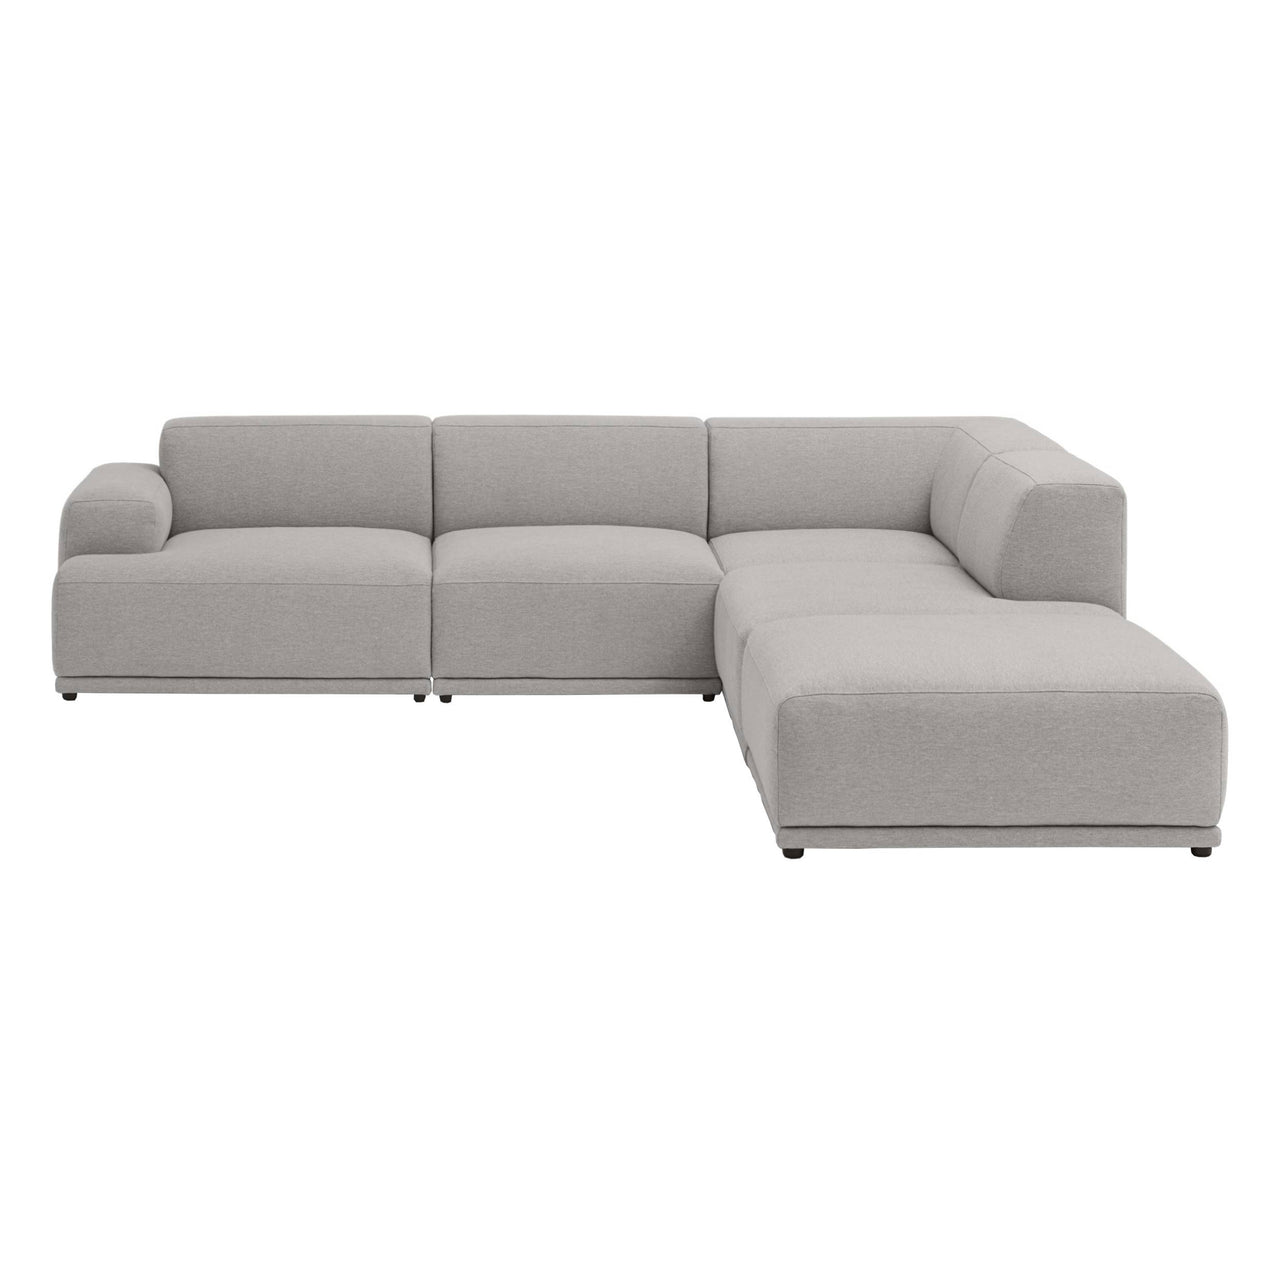 Connect Soft Modular Sofa: Corner + Configuration 2 + Clay 12